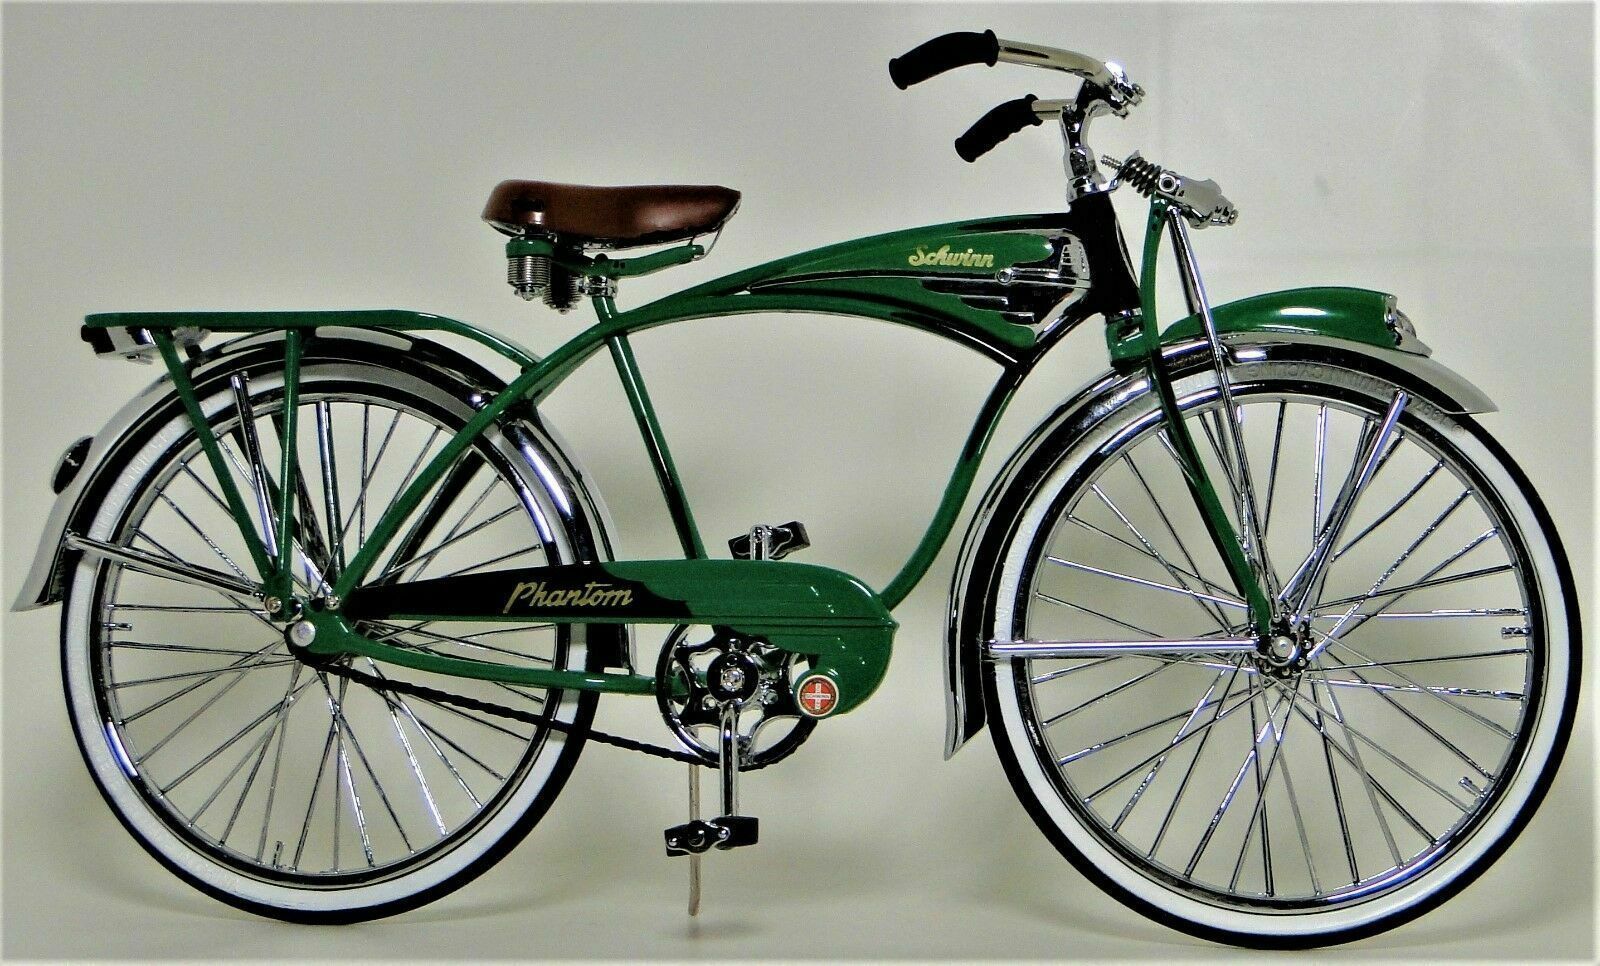 Schwinn Vintage Bicycle 1950s Classic Bike Cycle Metal Model Length: 11 ... - S L1600